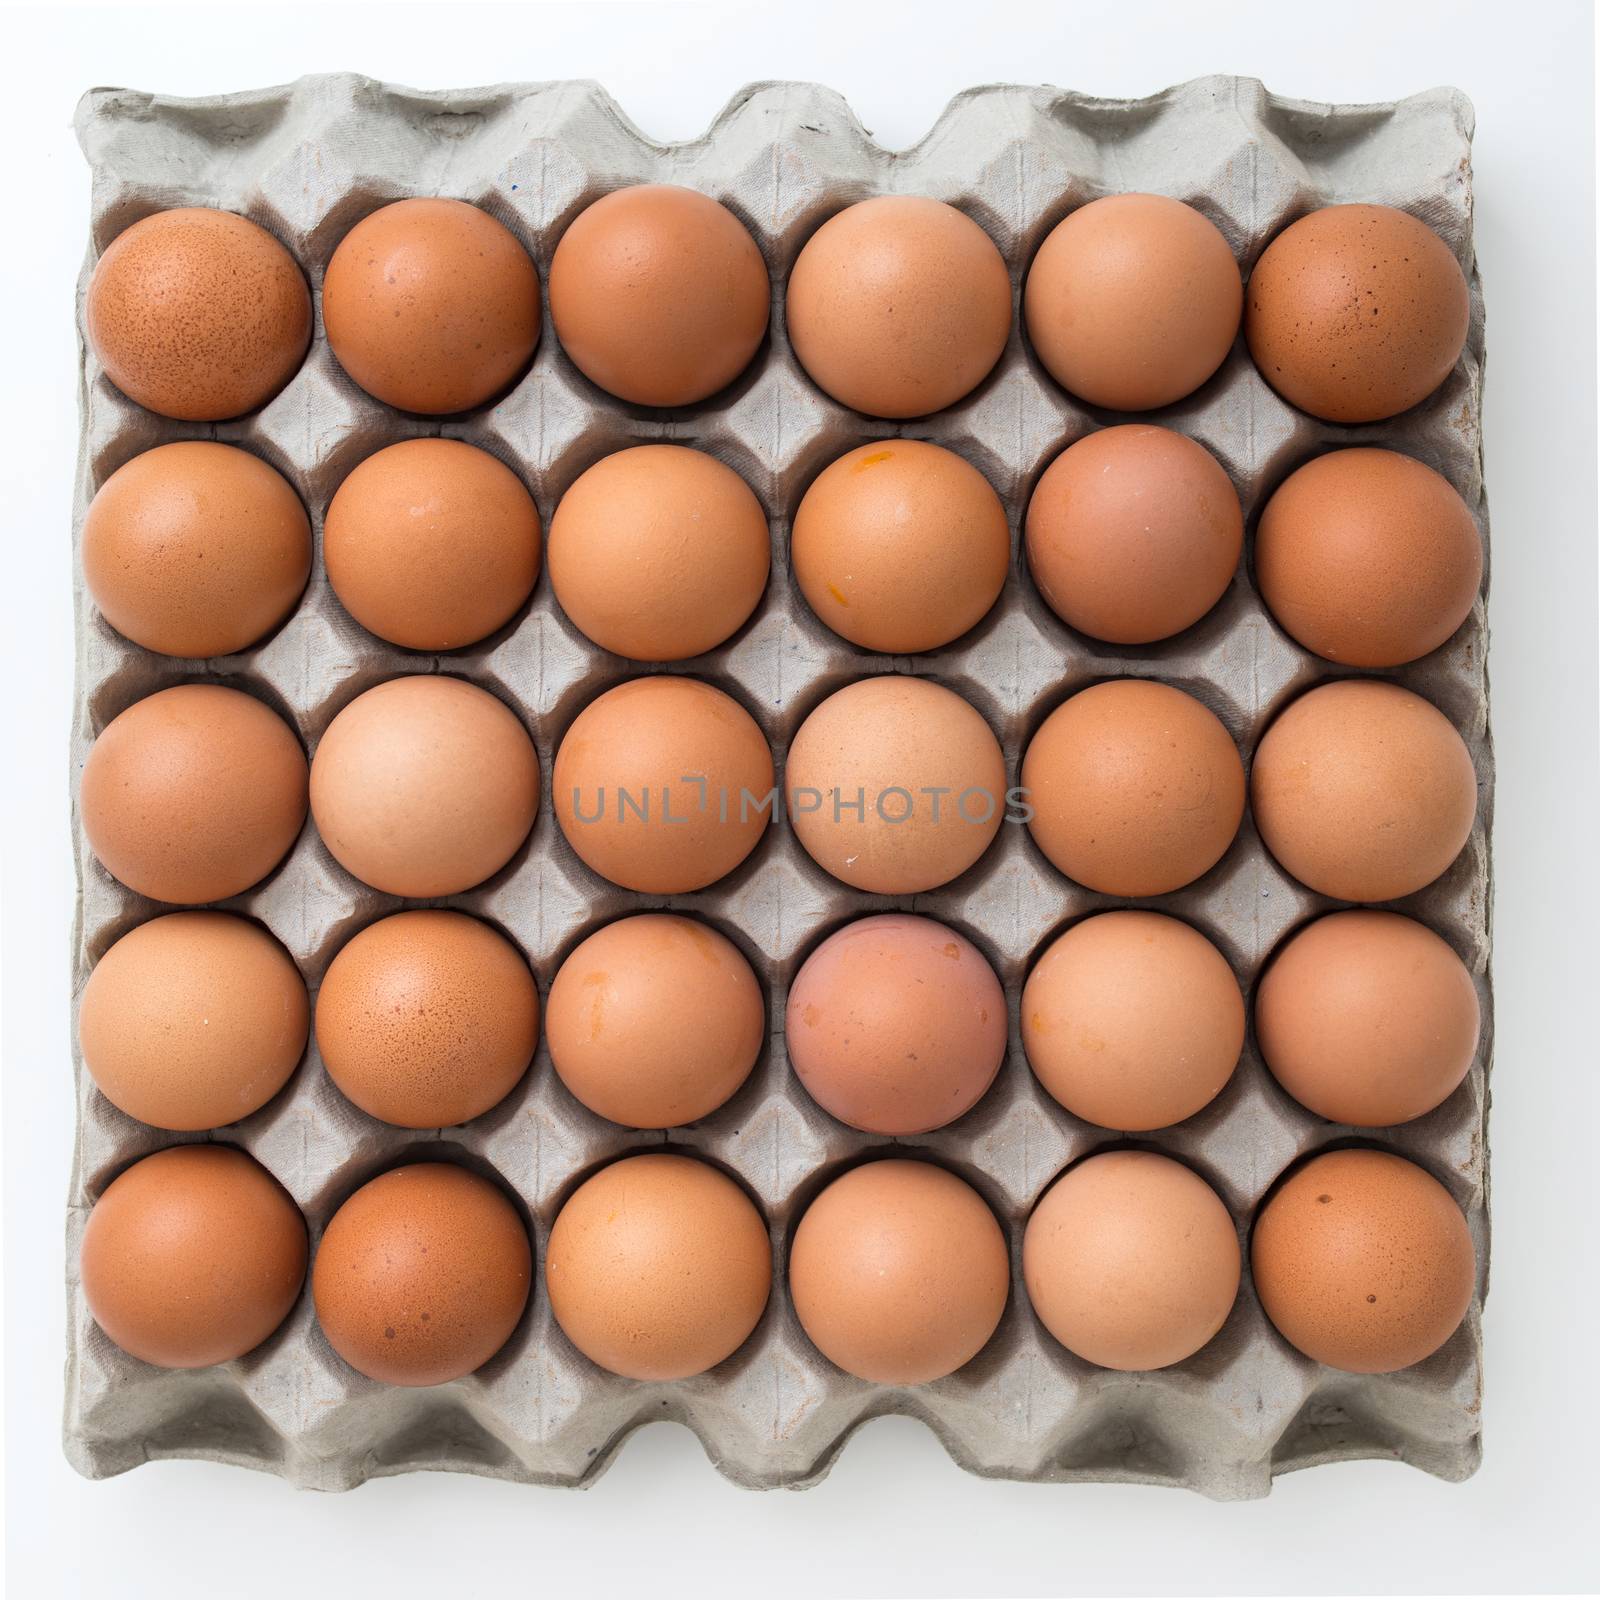 eggs in carton package by antpkr